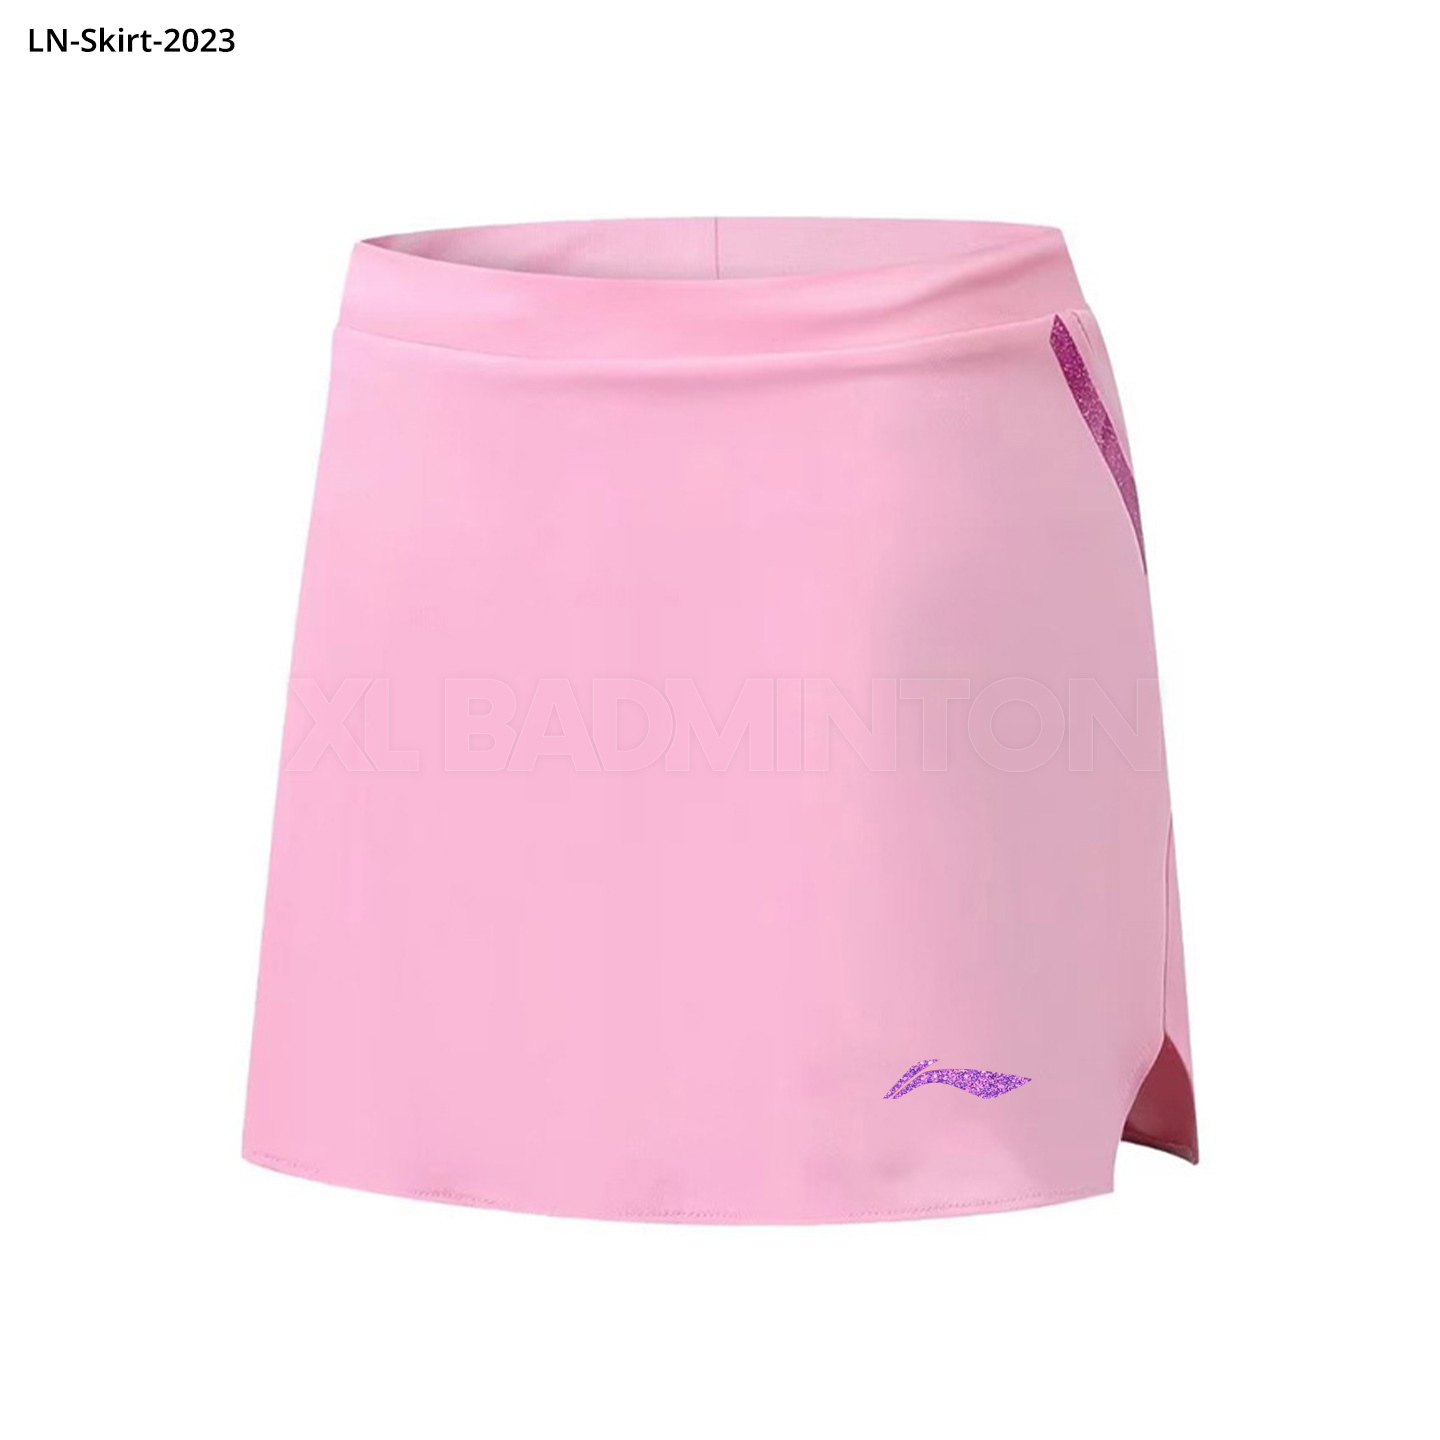 ln-skirt-2023-pink-1